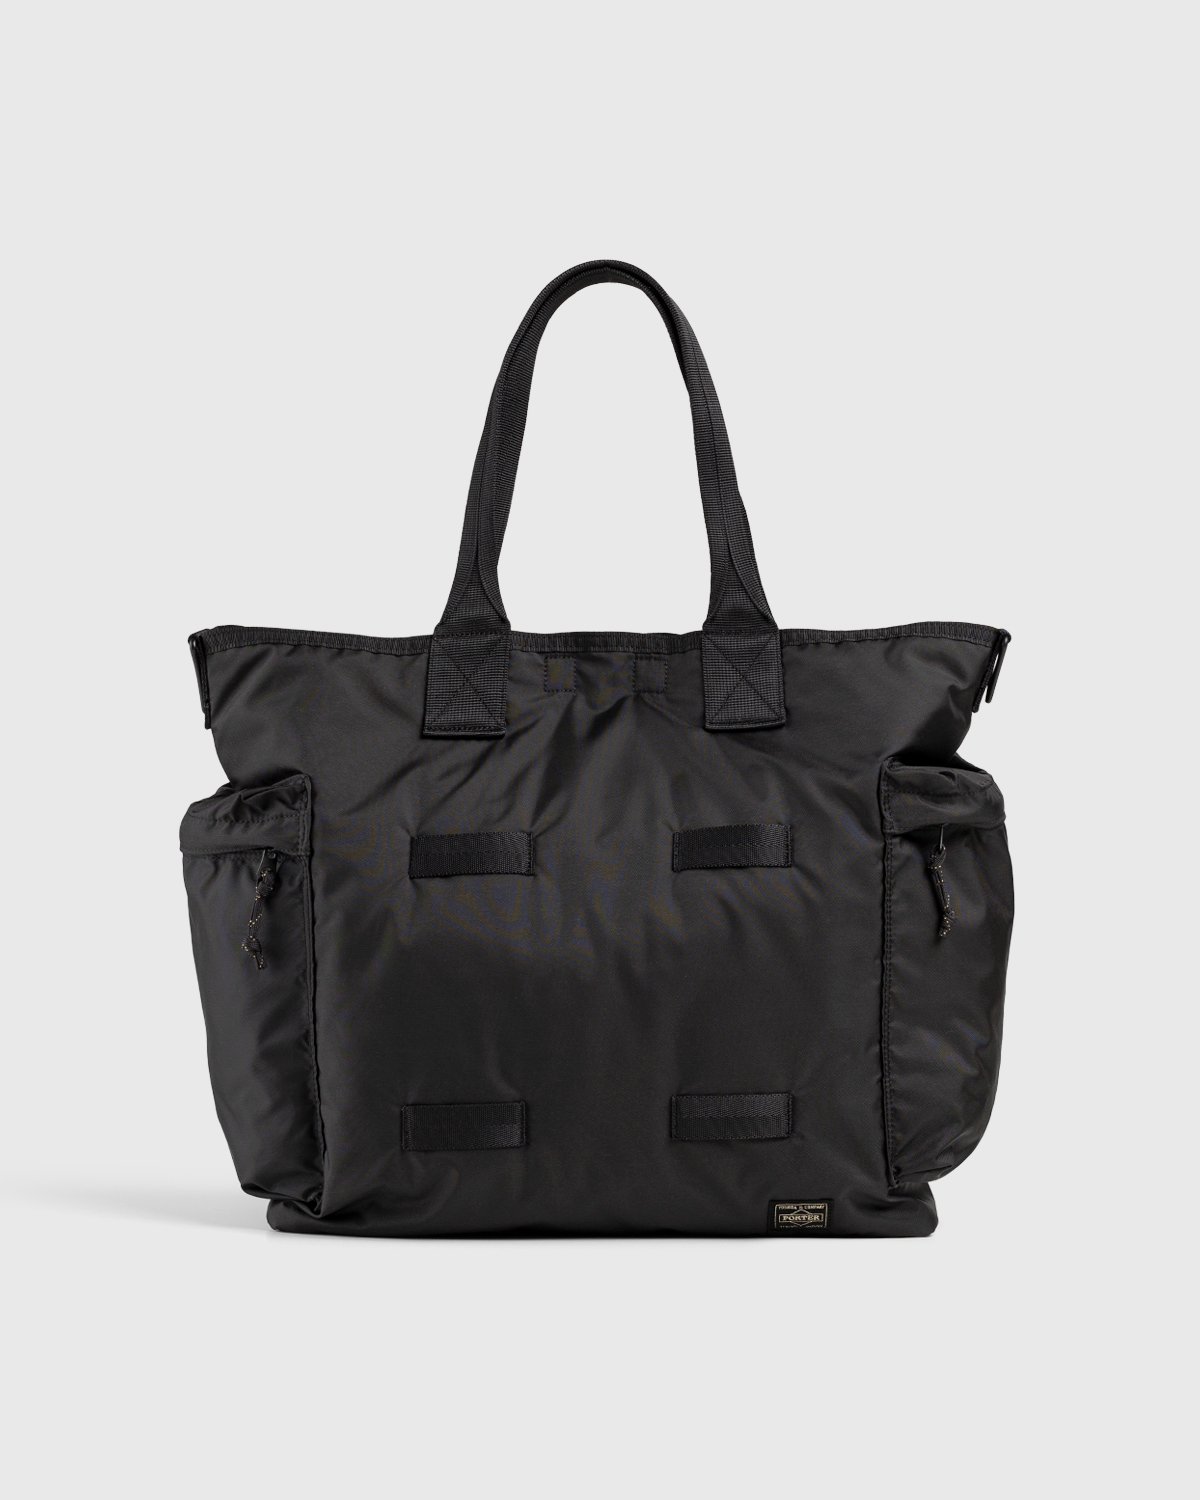 Porter-Yoshida & Co. - 2-Way Tote Bag Black - Accessories - Black - Image 1